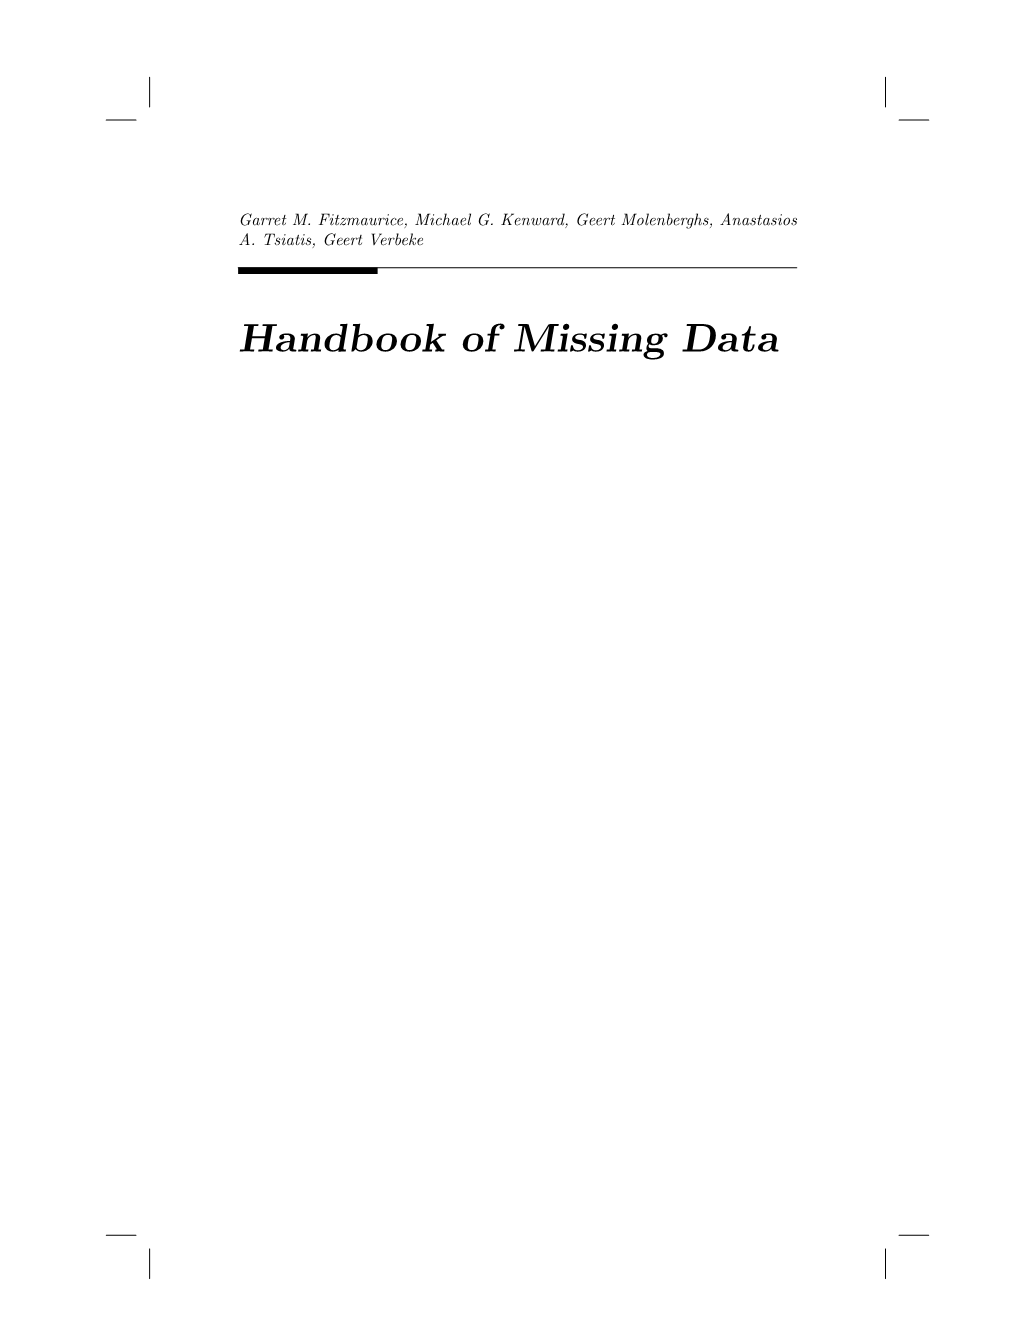 Handbook of Missing Data 2 Contents